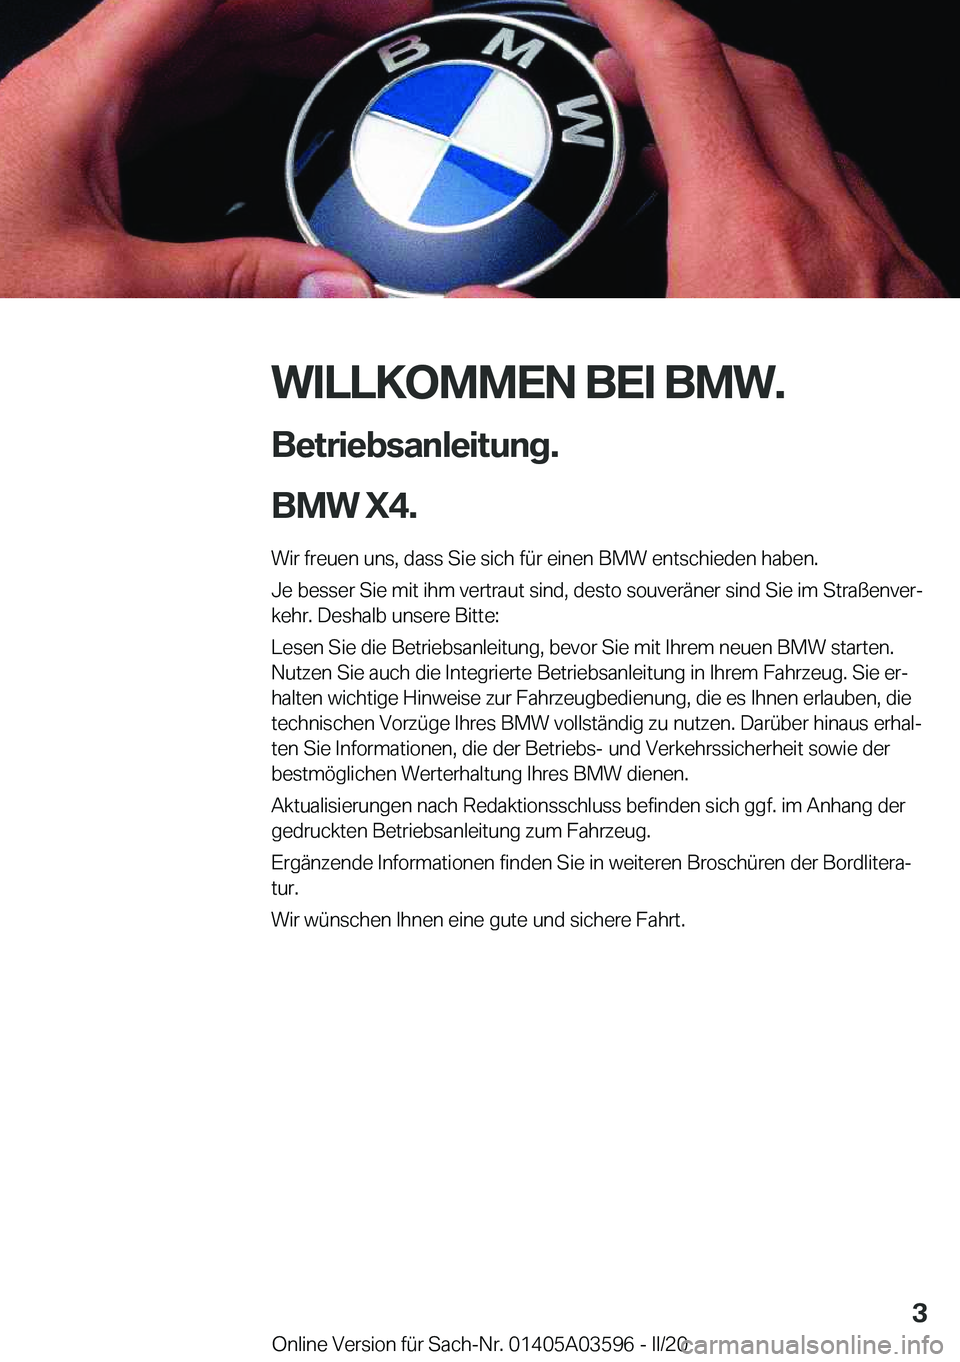 BMW X4 2020  Betriebsanleitungen (in German) �W�I�L�L�K�O�M�M�E�N��B�E�I��B�M�W�.�B�e�t�r�i�e�b�s�a�n�l�e�i�t�u�n�g�.
�B�M�W��X�4�. �W�i�r��f�r�e�u�e�n��u�n�s�,��d�a�s�s��S�i�e��s�i�c�h��f�